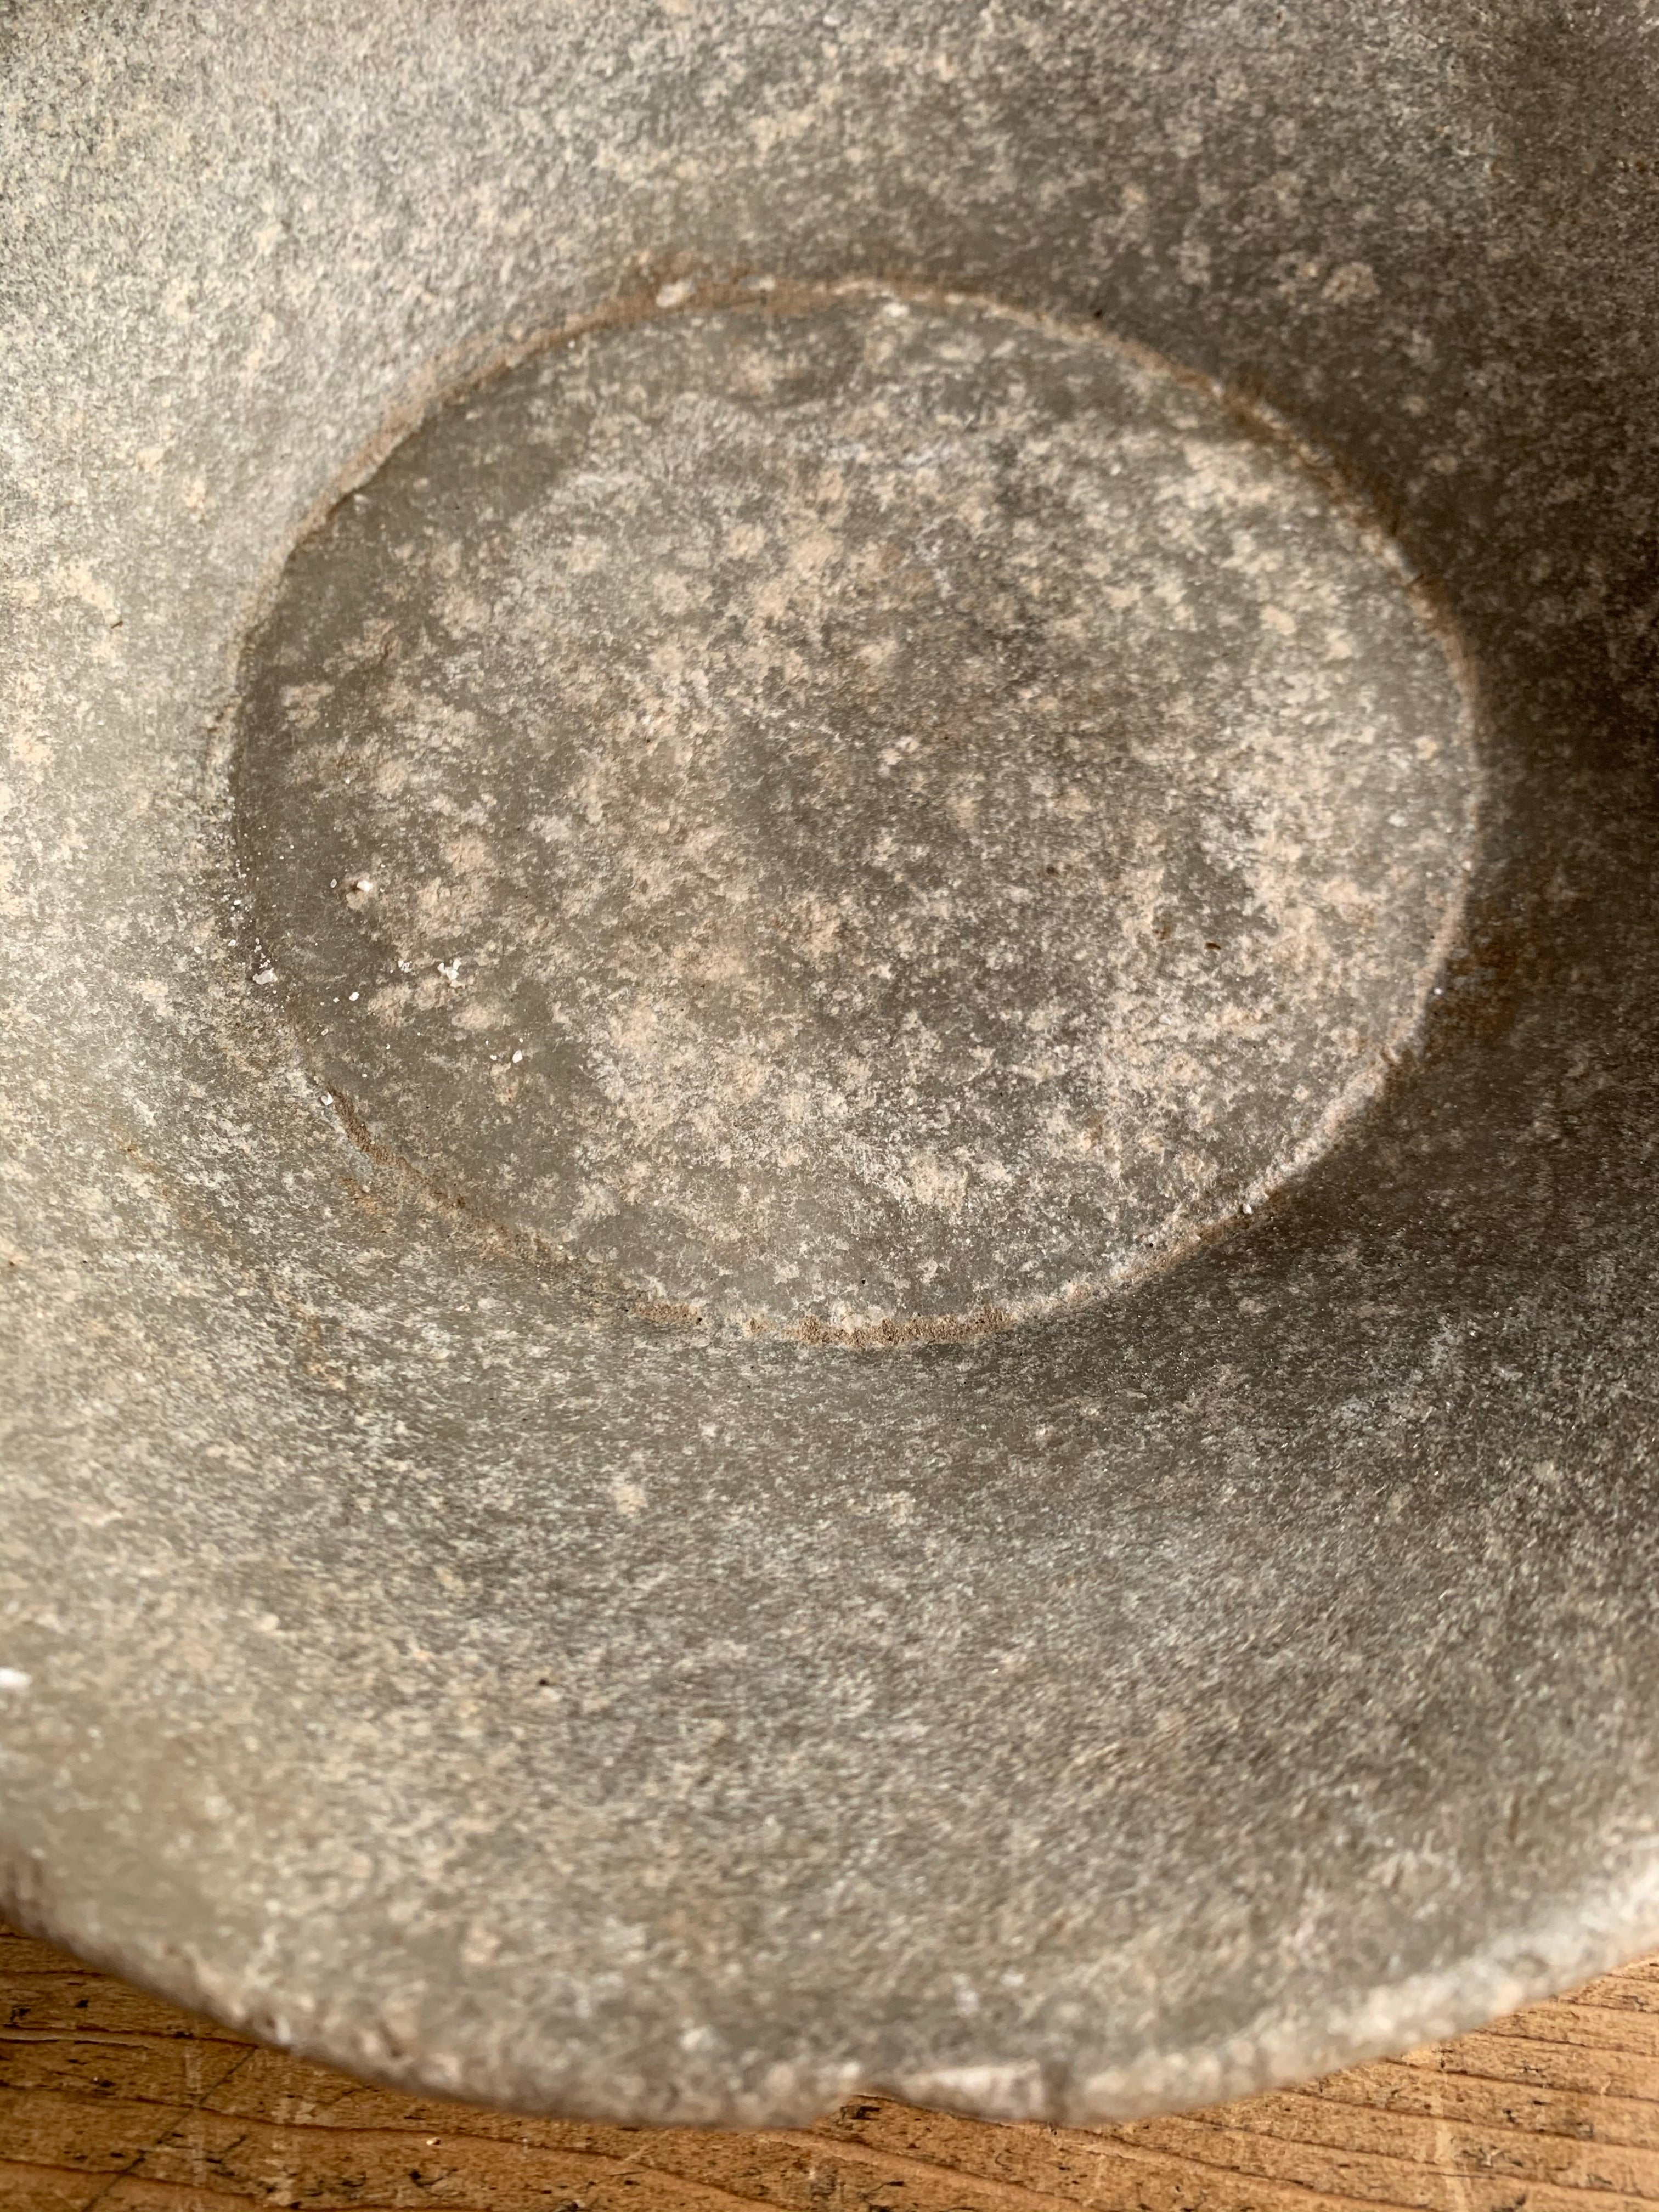 Antique Marble Stone  Bowl 5